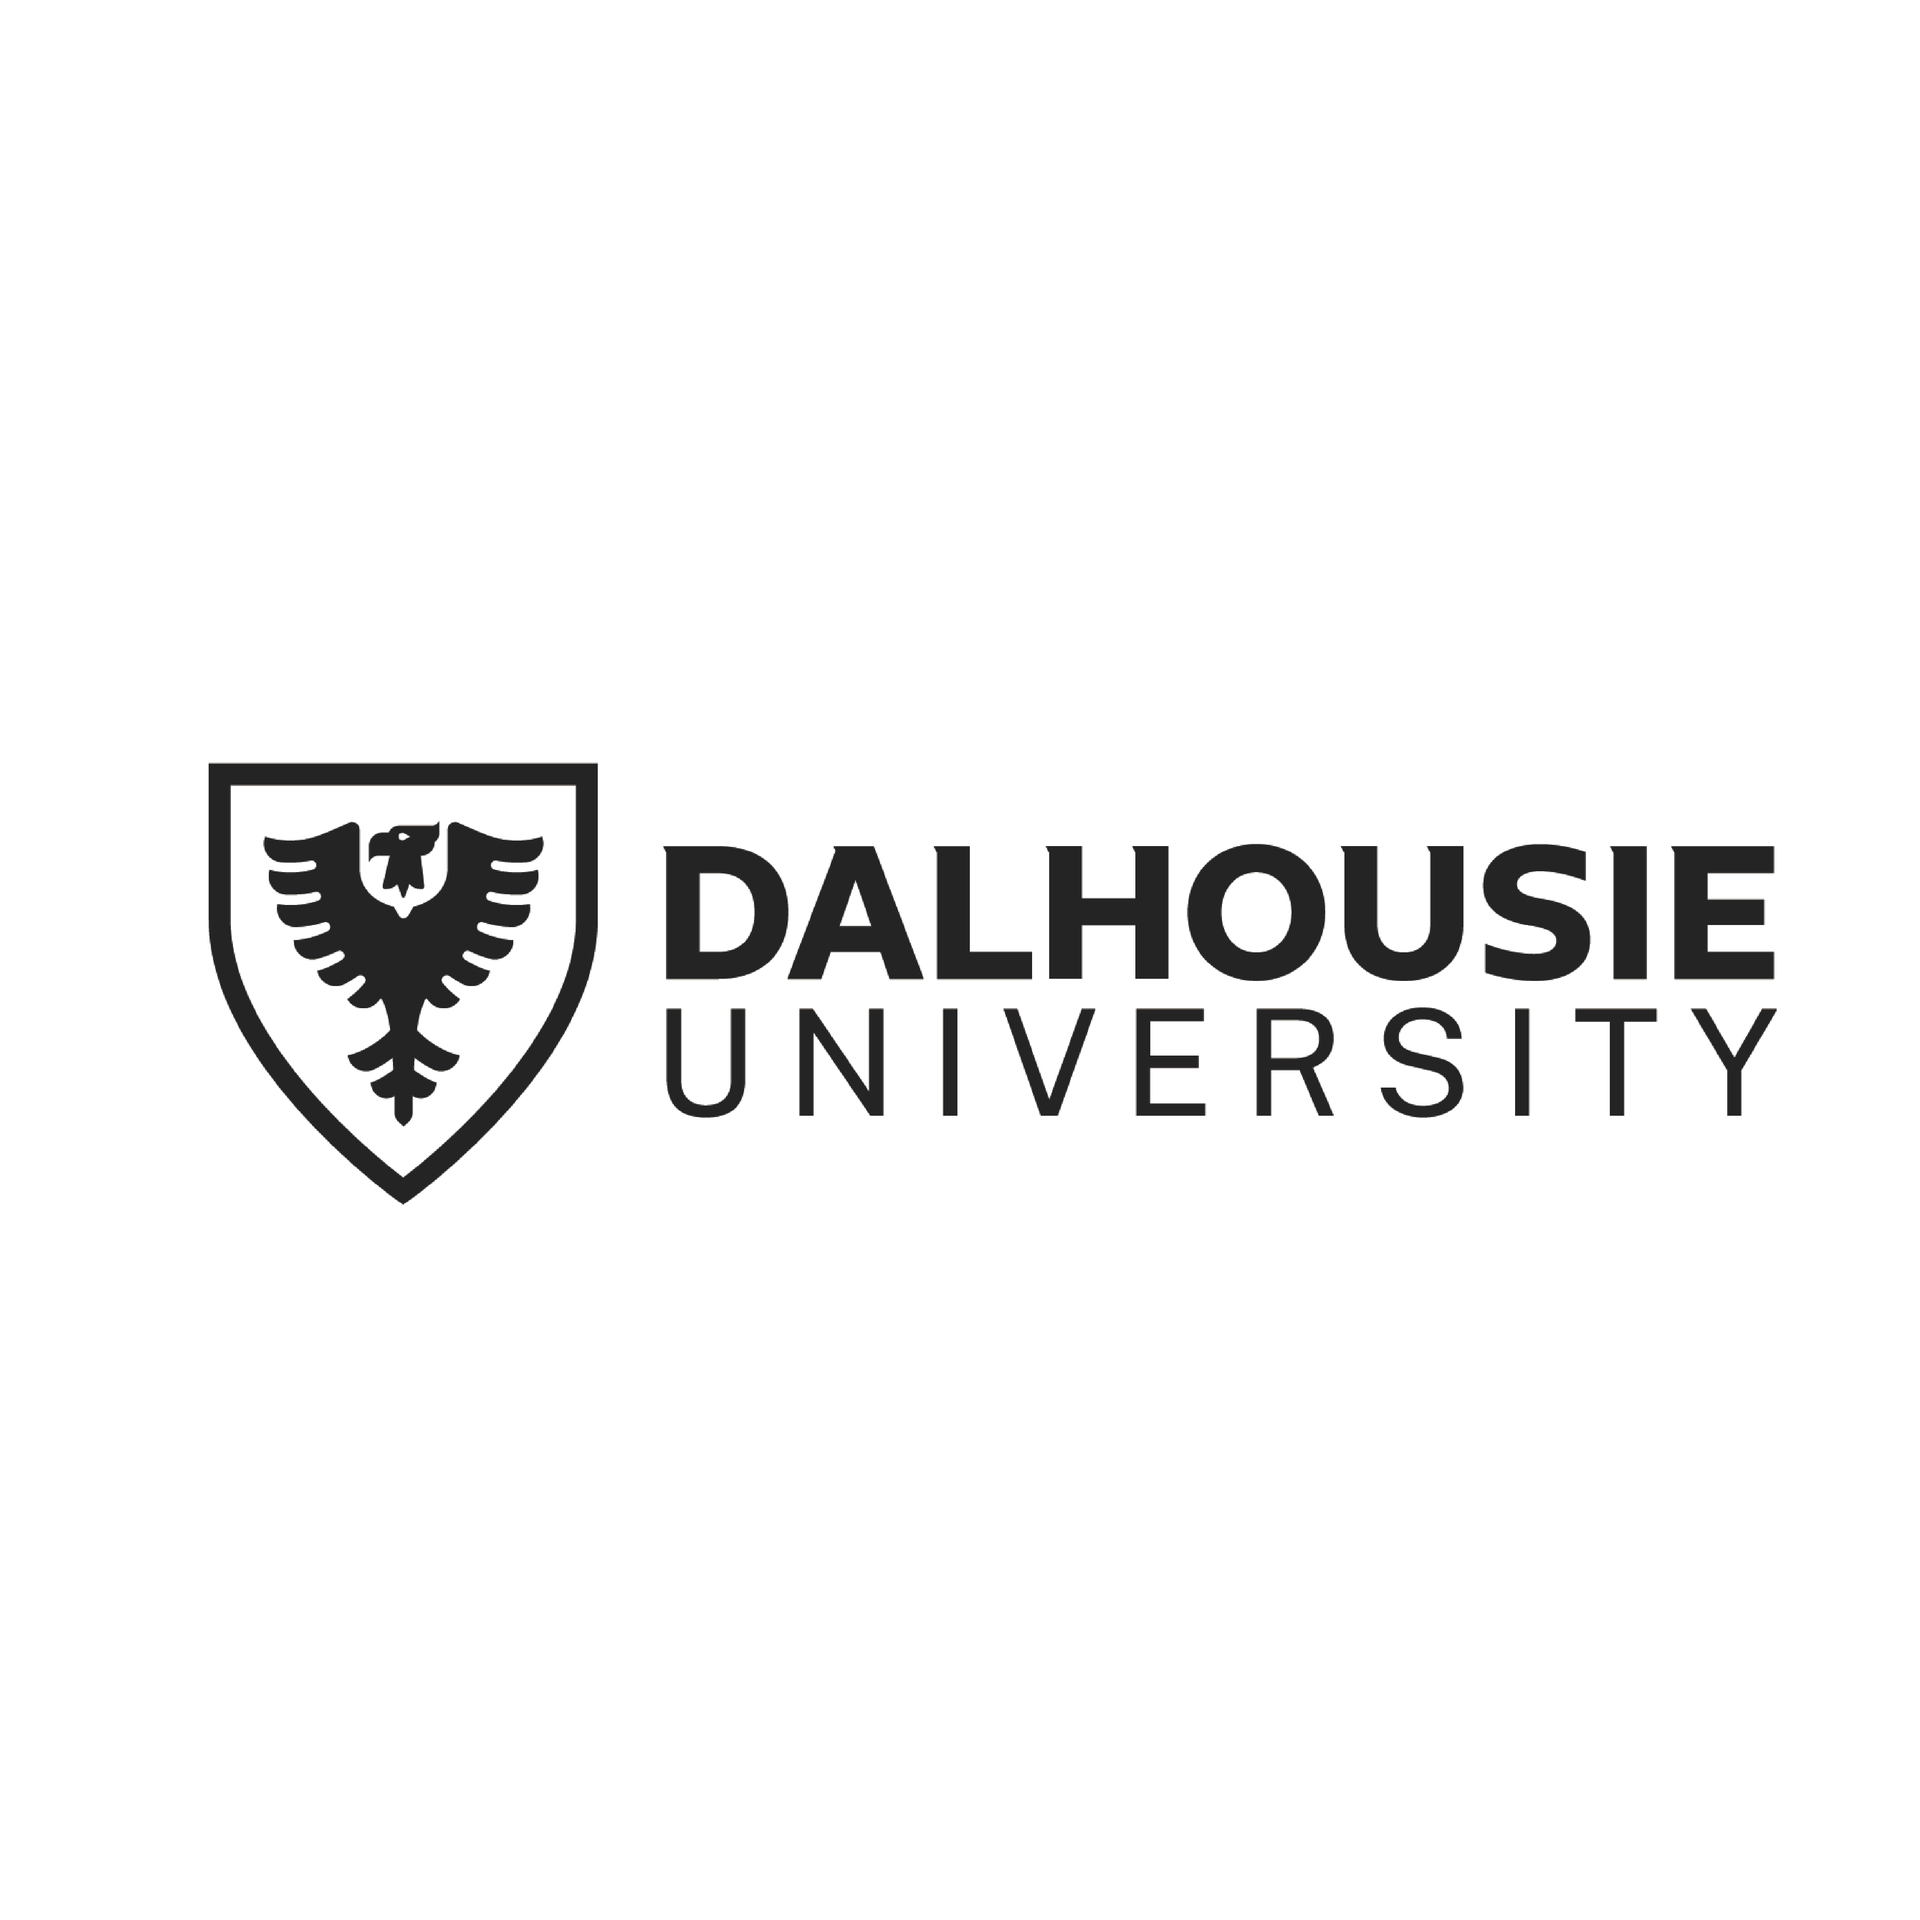 Dalhousie University, Canada